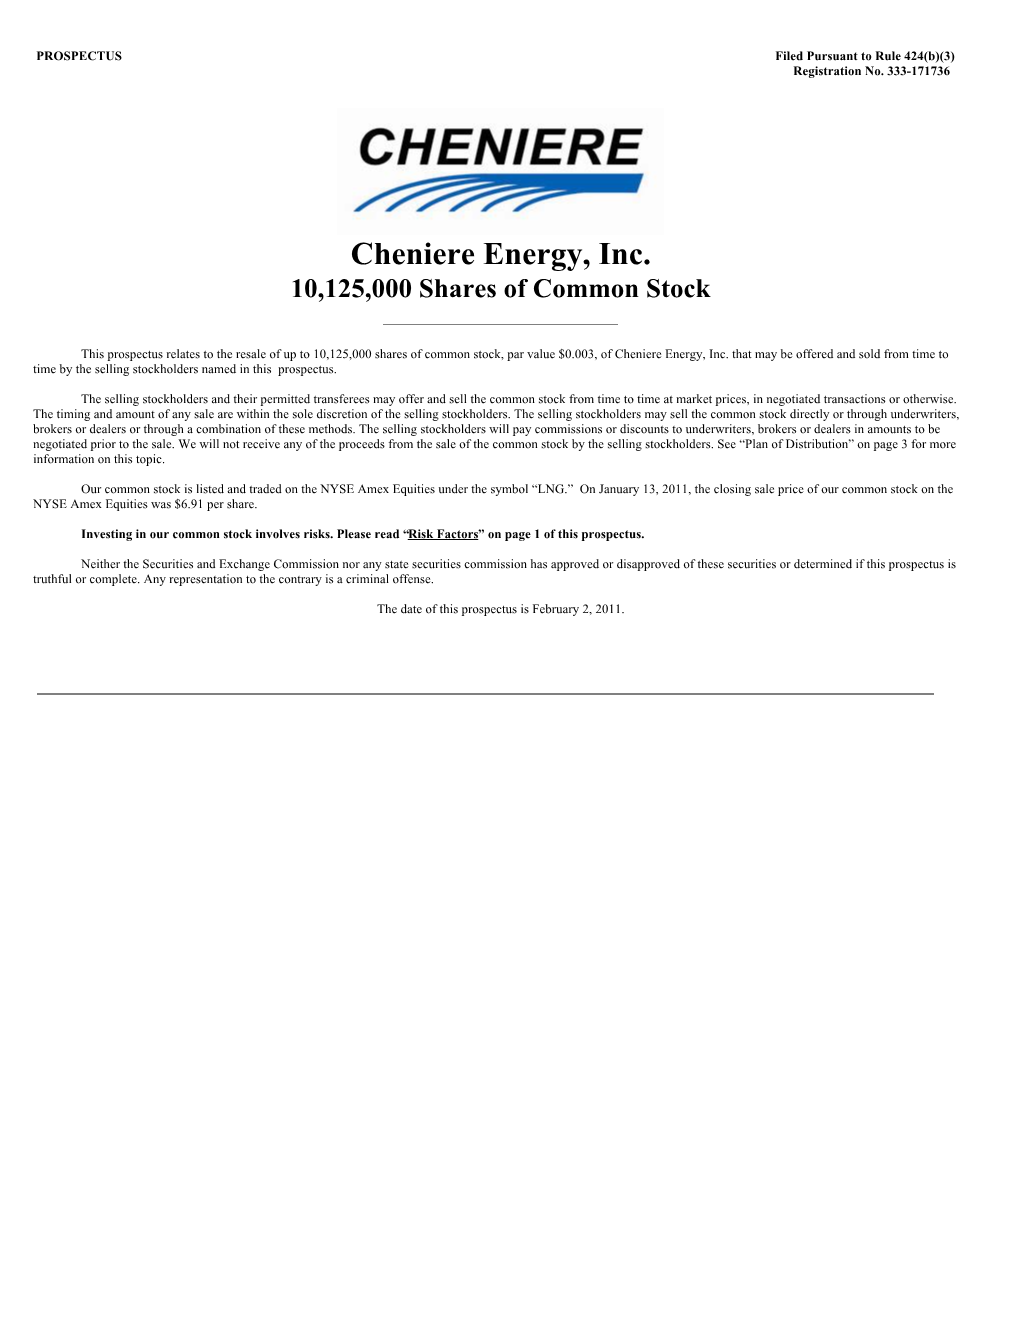 Cheniere Energy, Inc. 10125000 Shares of Common Stock